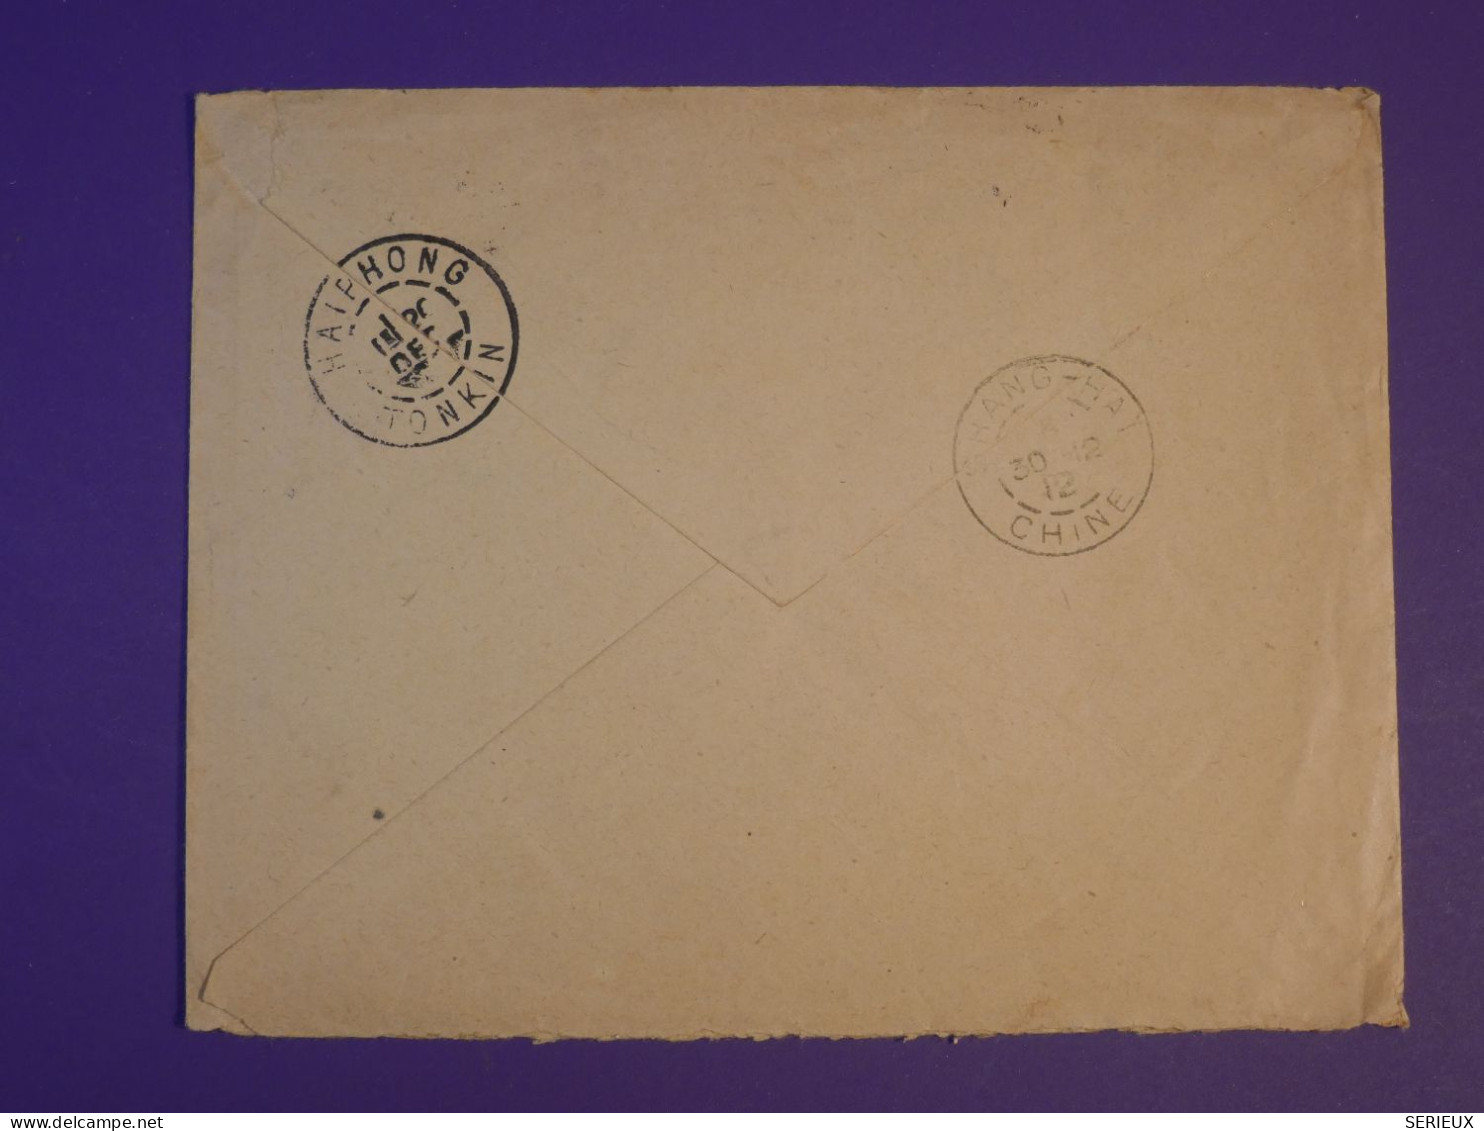 DG1  INDOCHINE BELLE LETTRE 1912 VOIE TRANSSIBERIENNE PETIT BUREAU YENBAY   A  STETTIN ALLEMAGNE   +AFF. INTERESSANT+++ - Briefe U. Dokumente